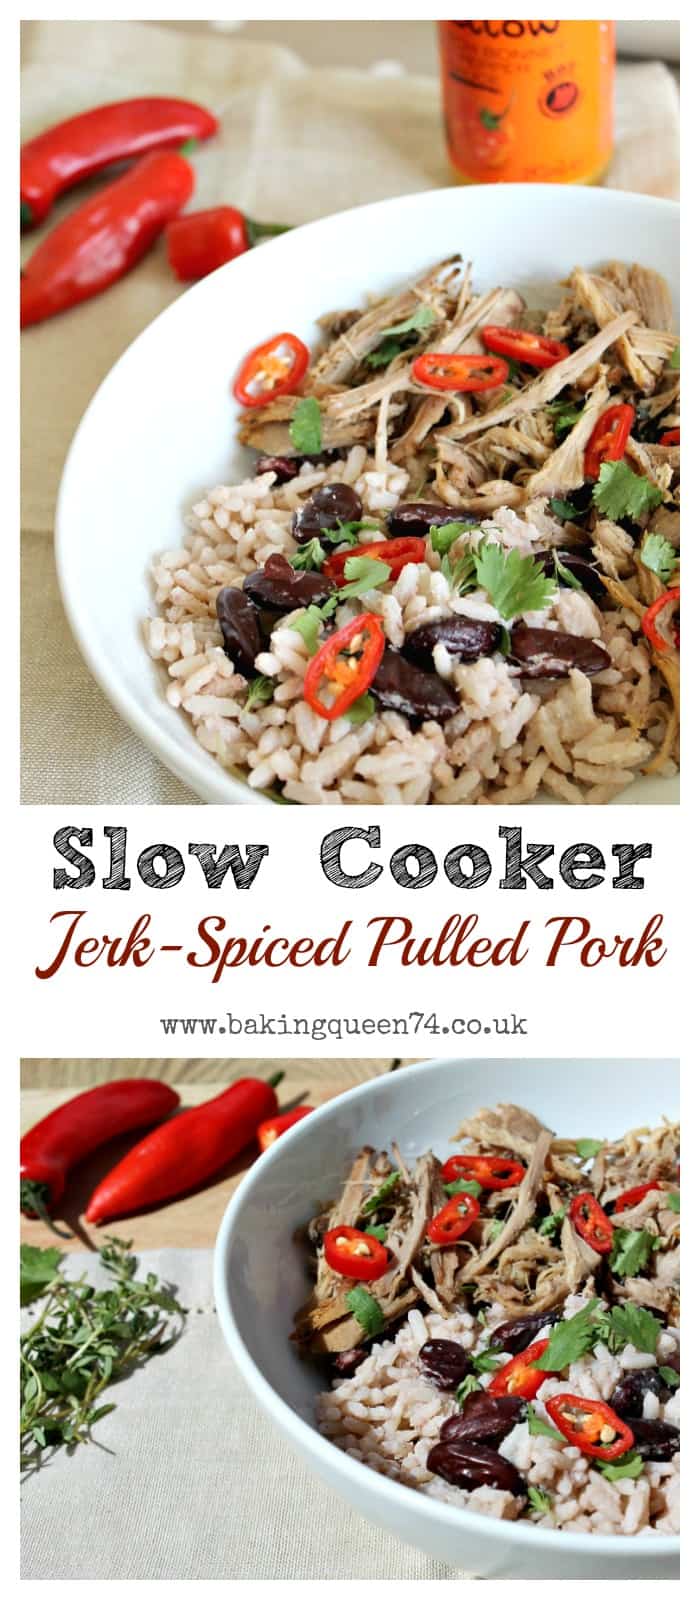 Slow Cooker Jerk-Spiced Pulled Pork - BakingQueen74